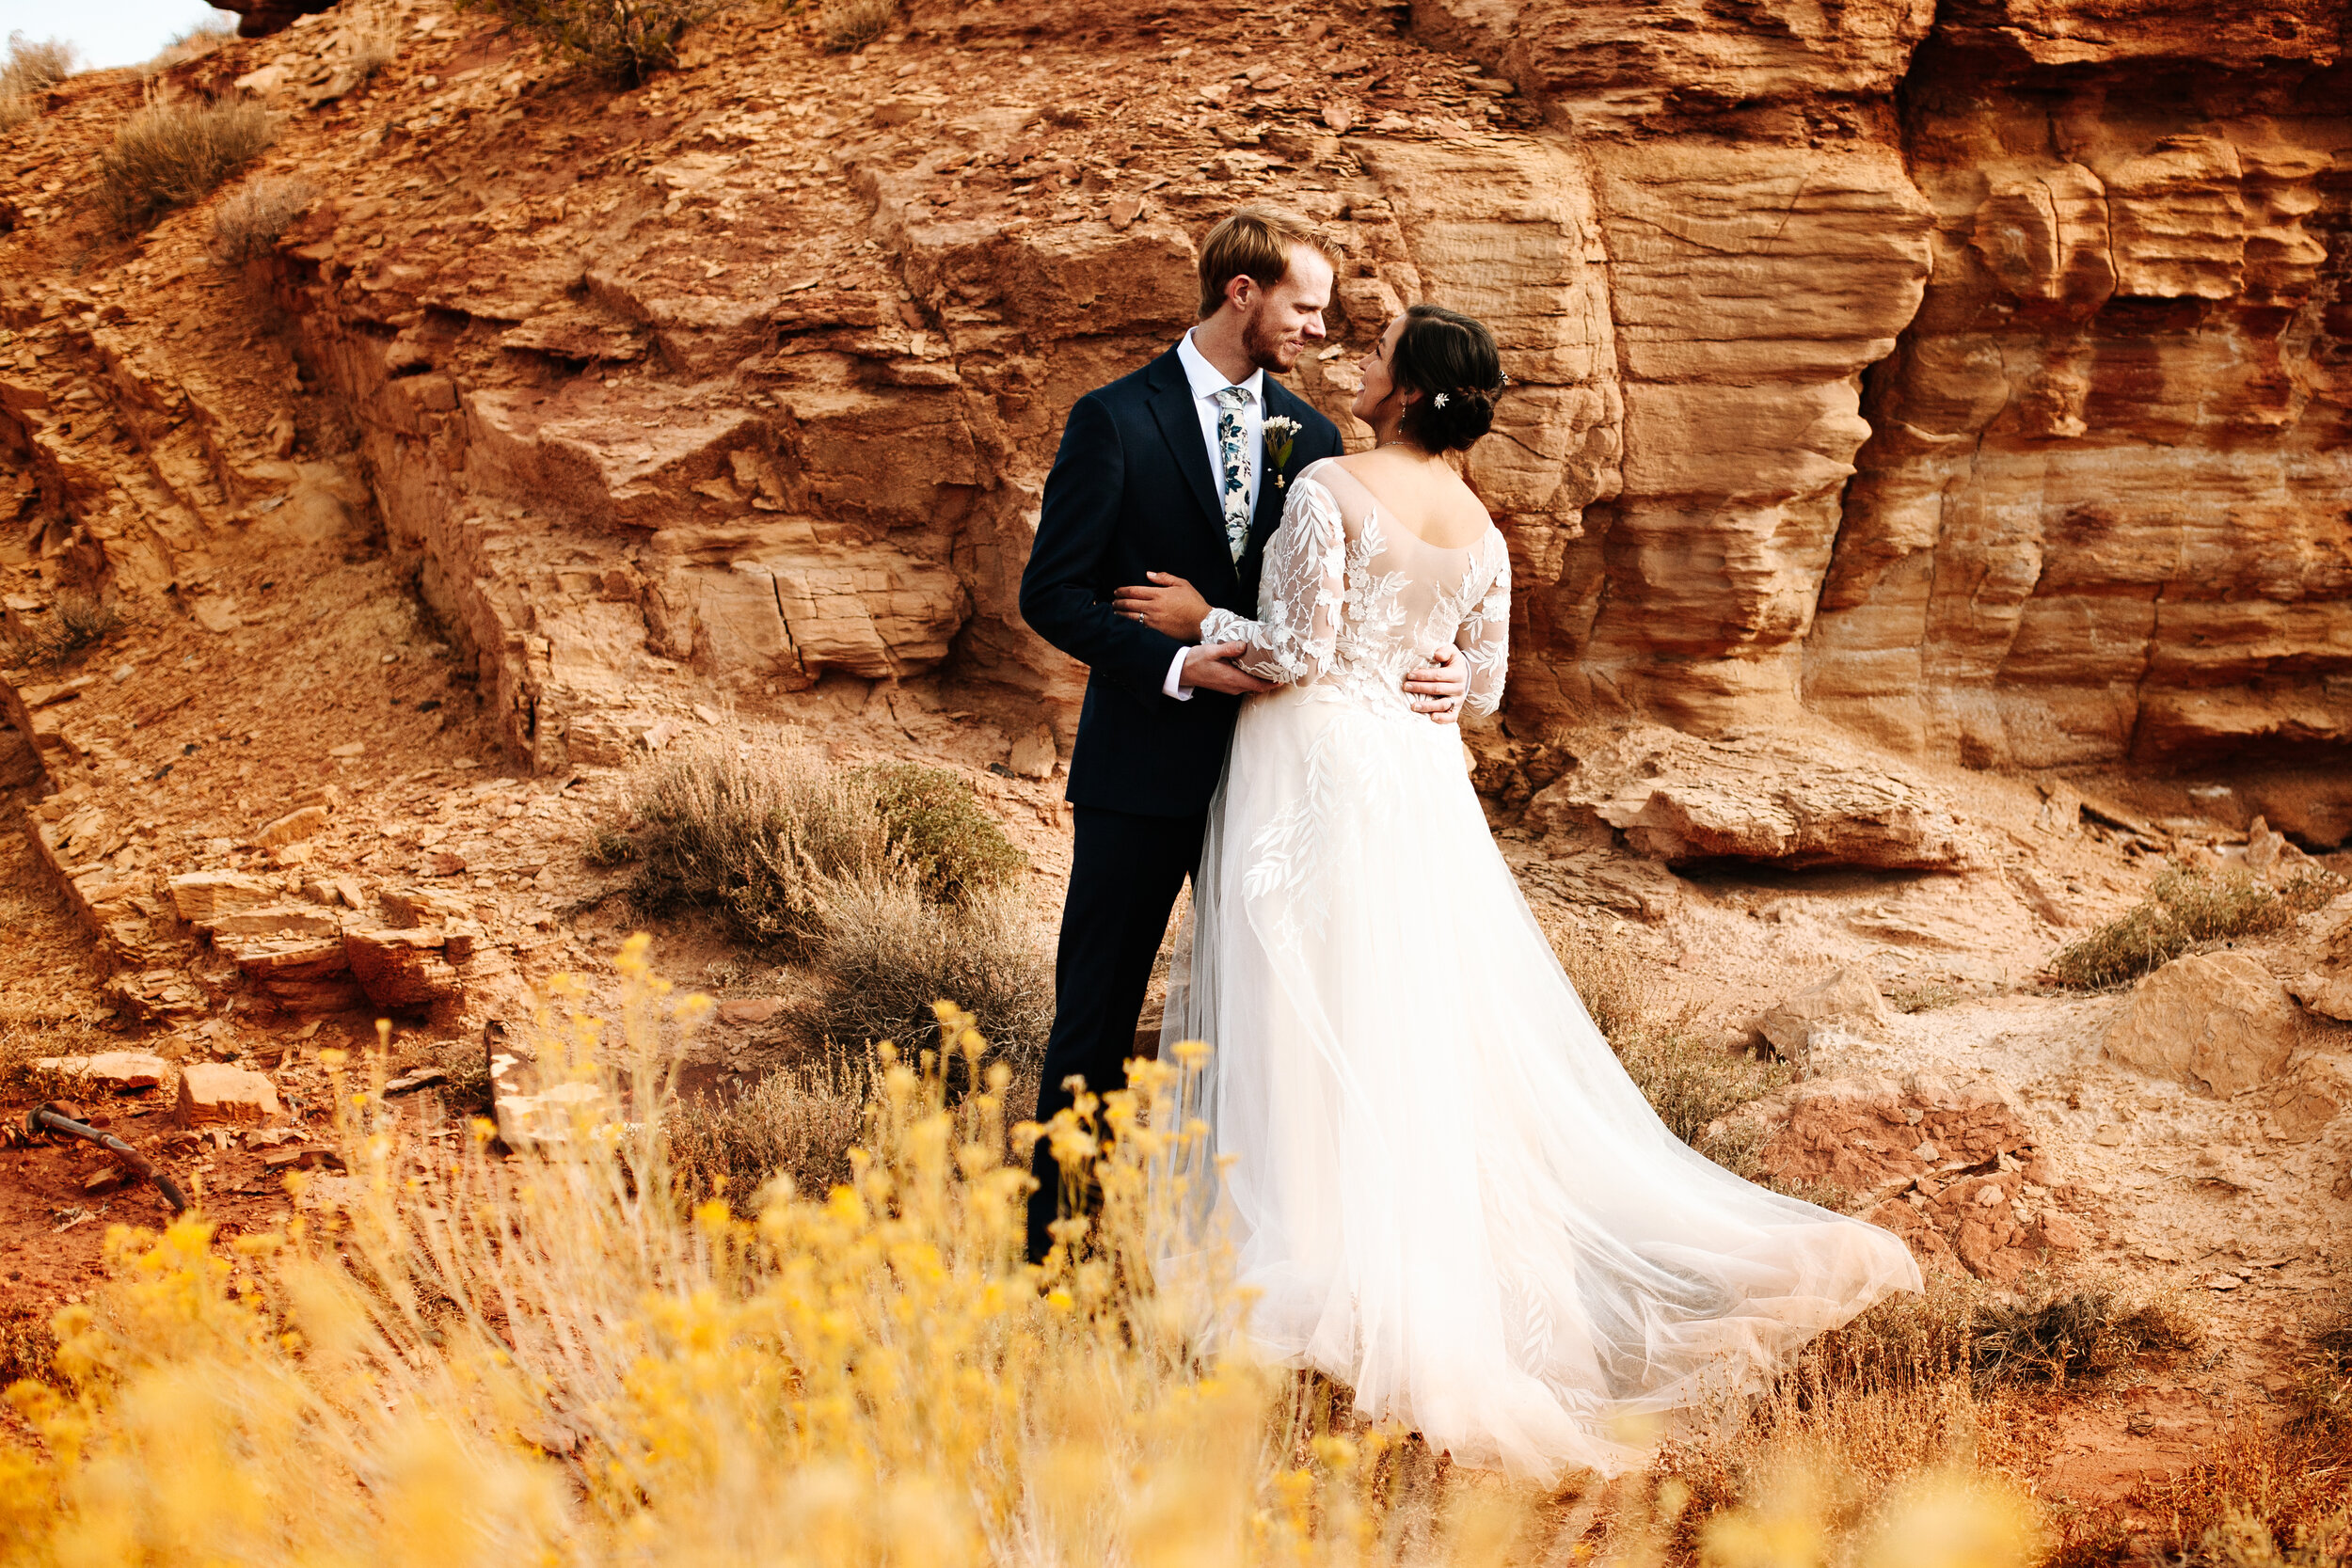 Couple at their desert wedding in Moab, Utah.